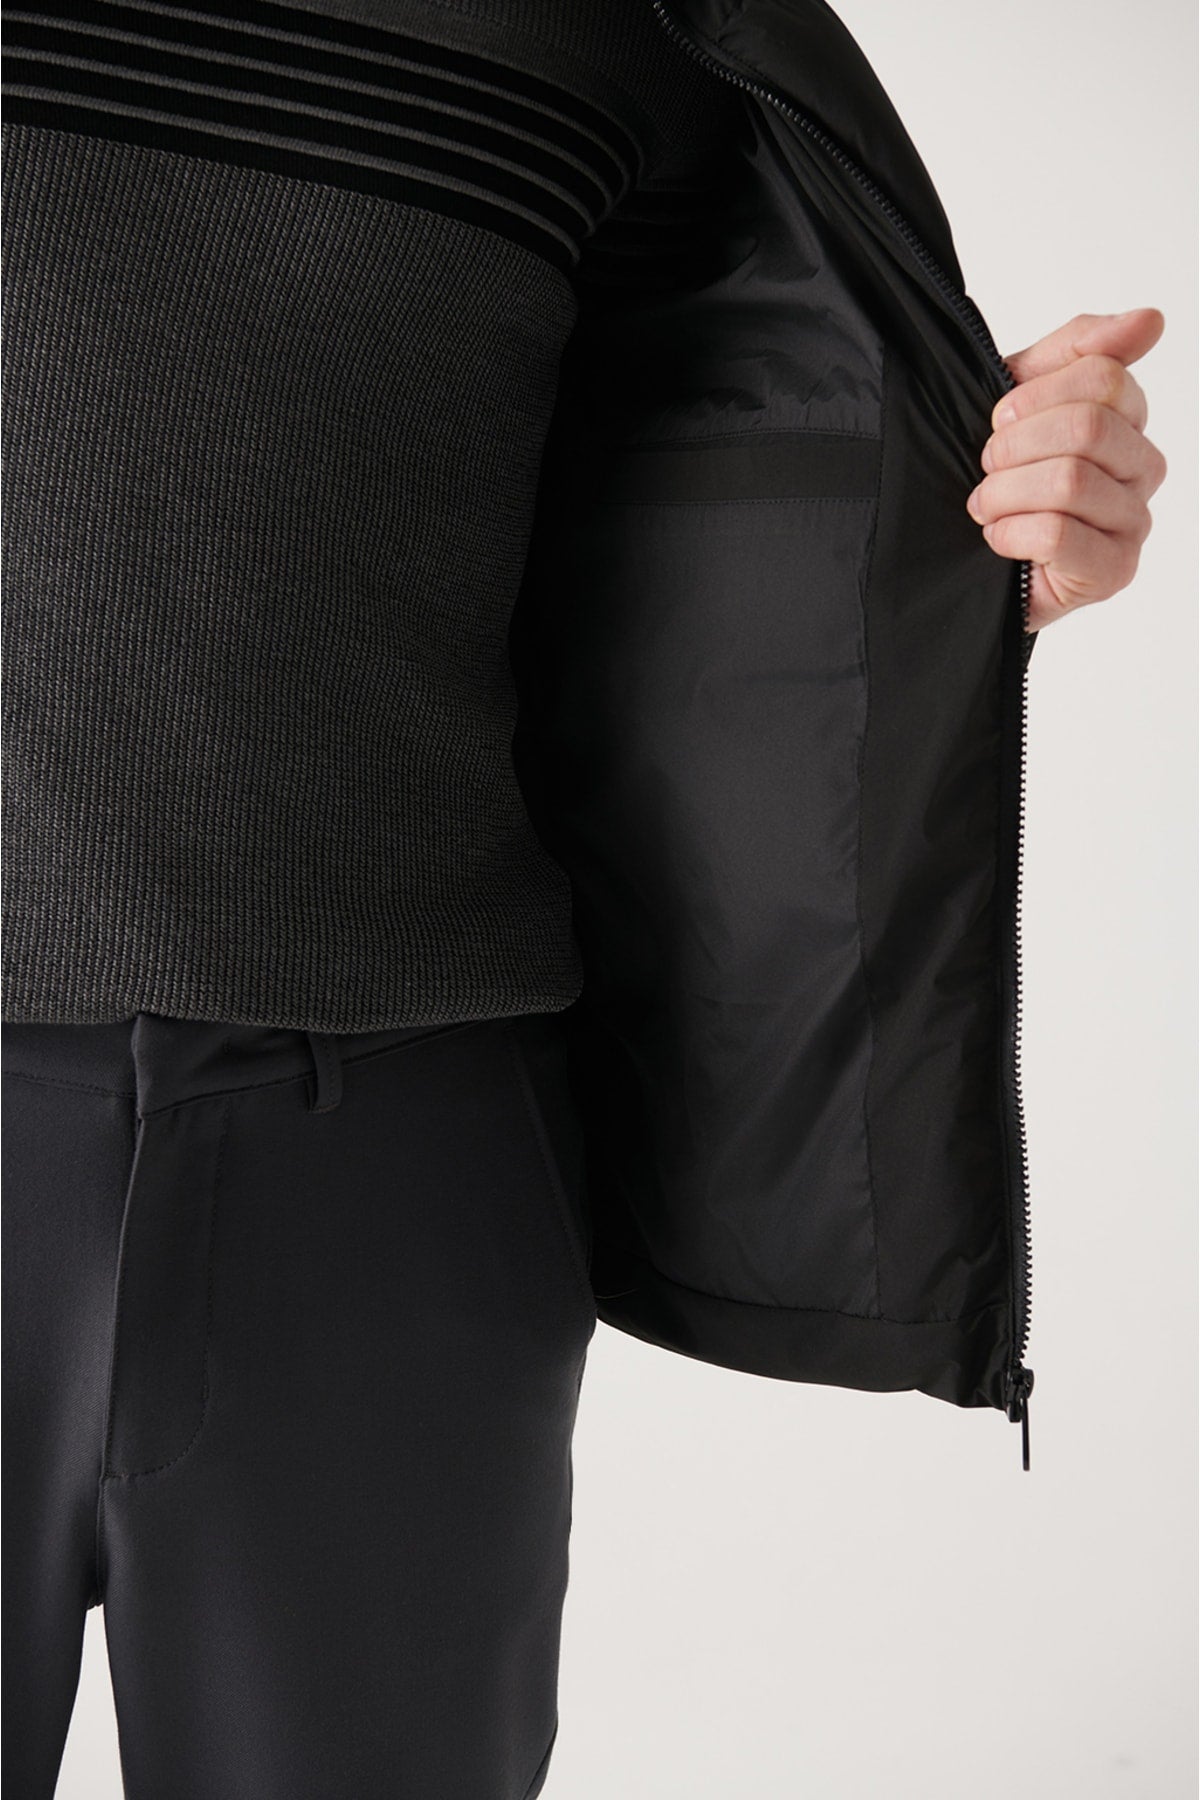 Men's black upright collar water repulsion windproof Kapitone inflatable coat E006012